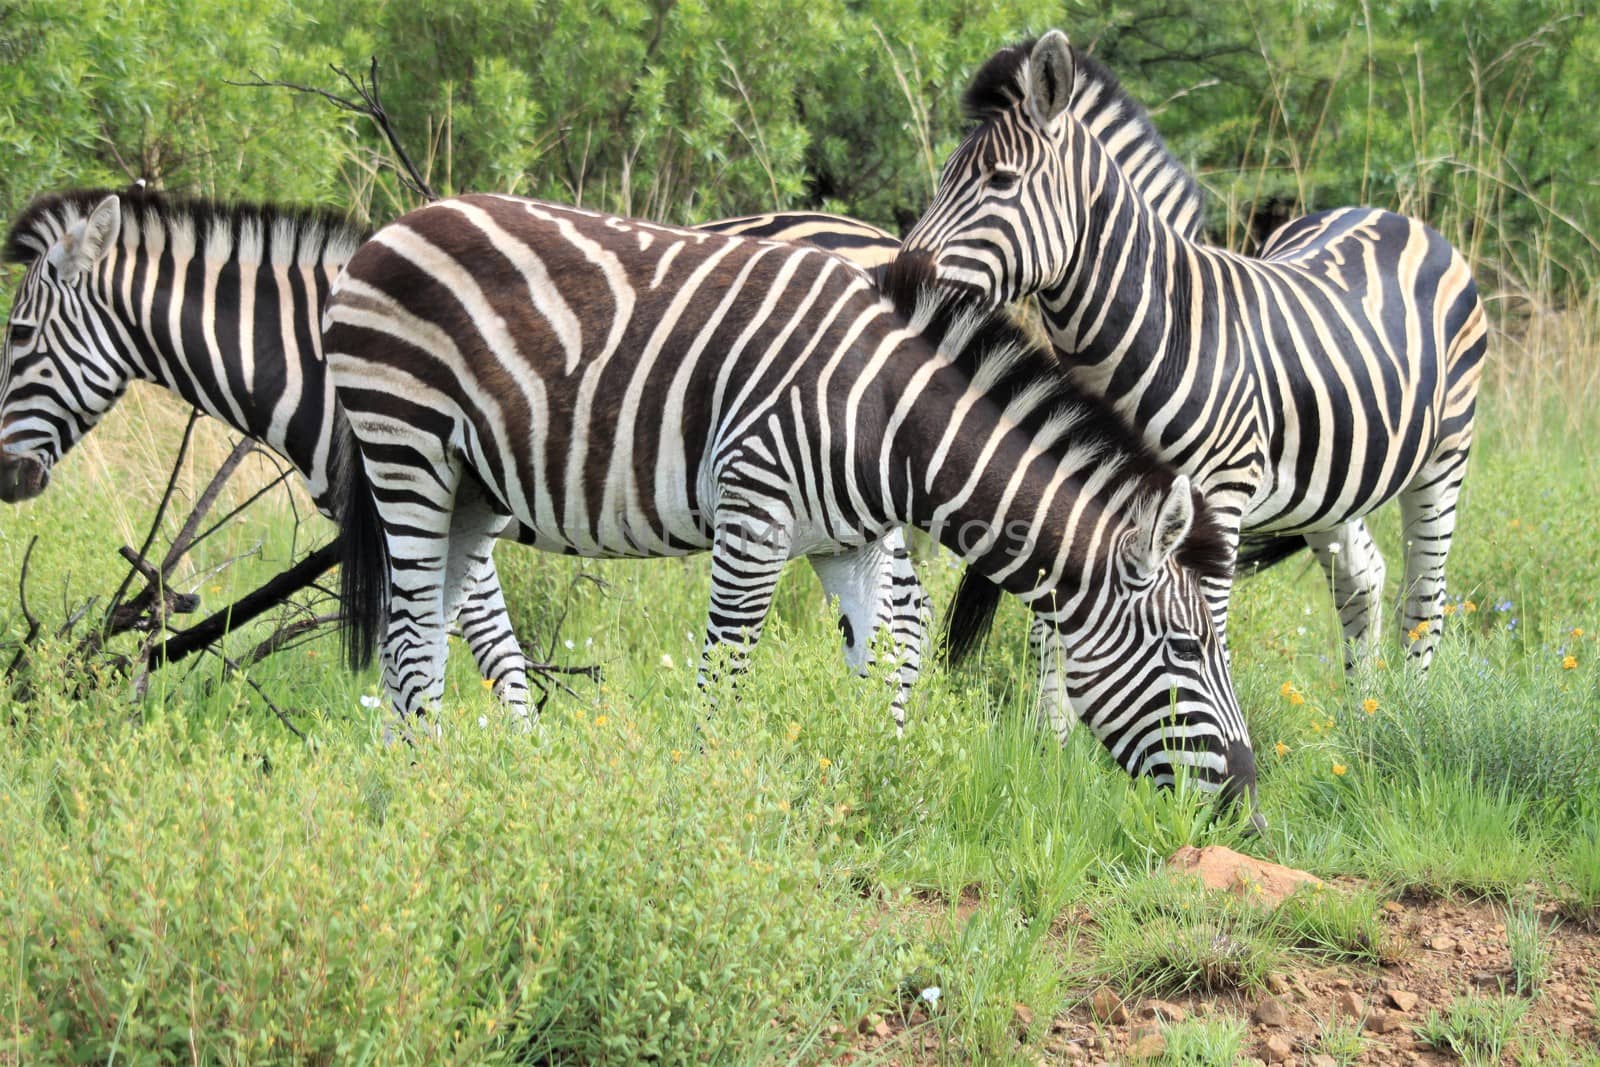 Tree zebras hanging around in the savanna eating grass